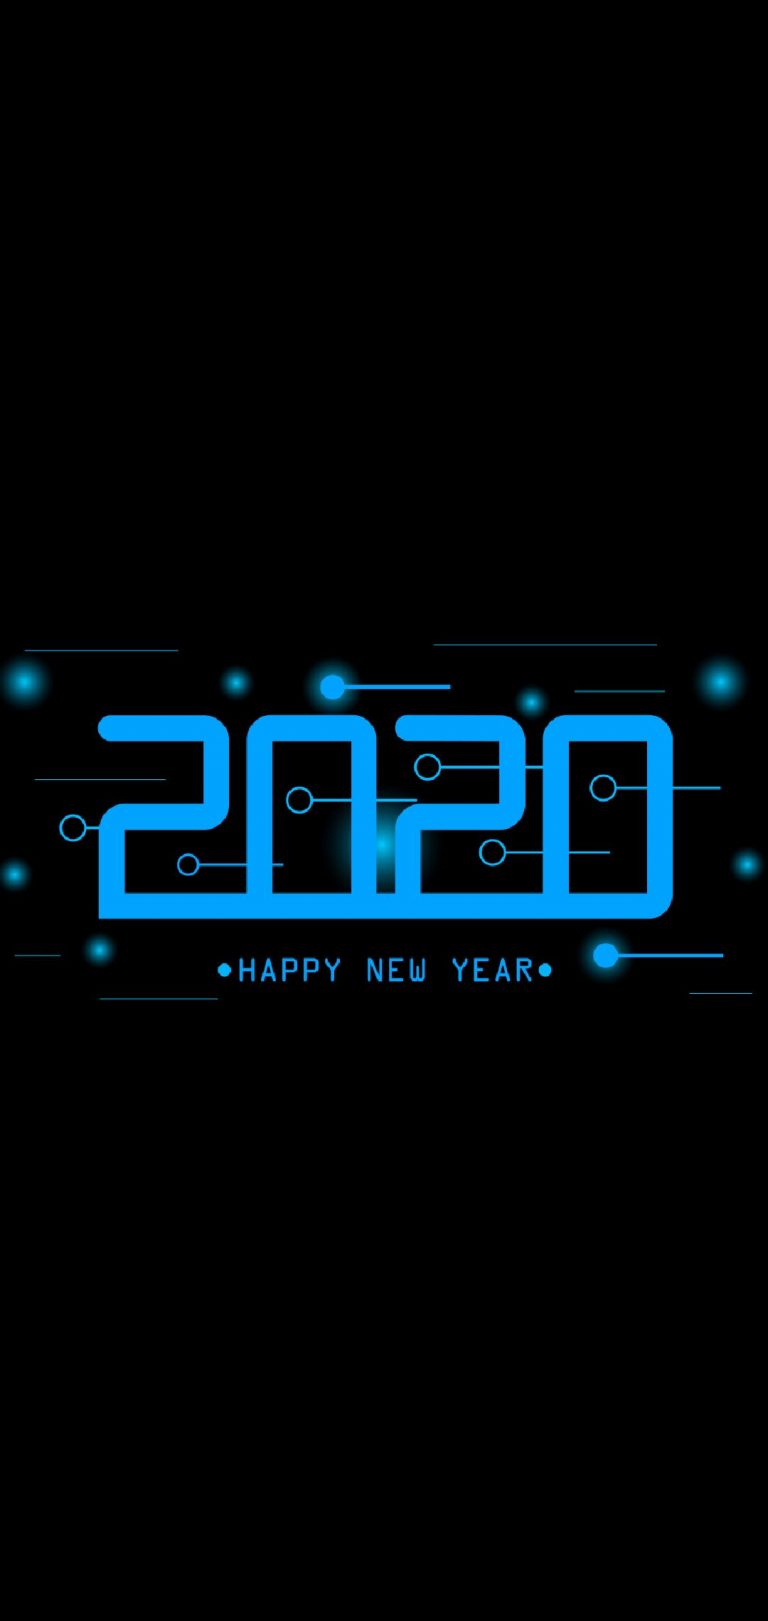 Happy New Year 2020 Phone Wallpaper 31 - [1080x2280]